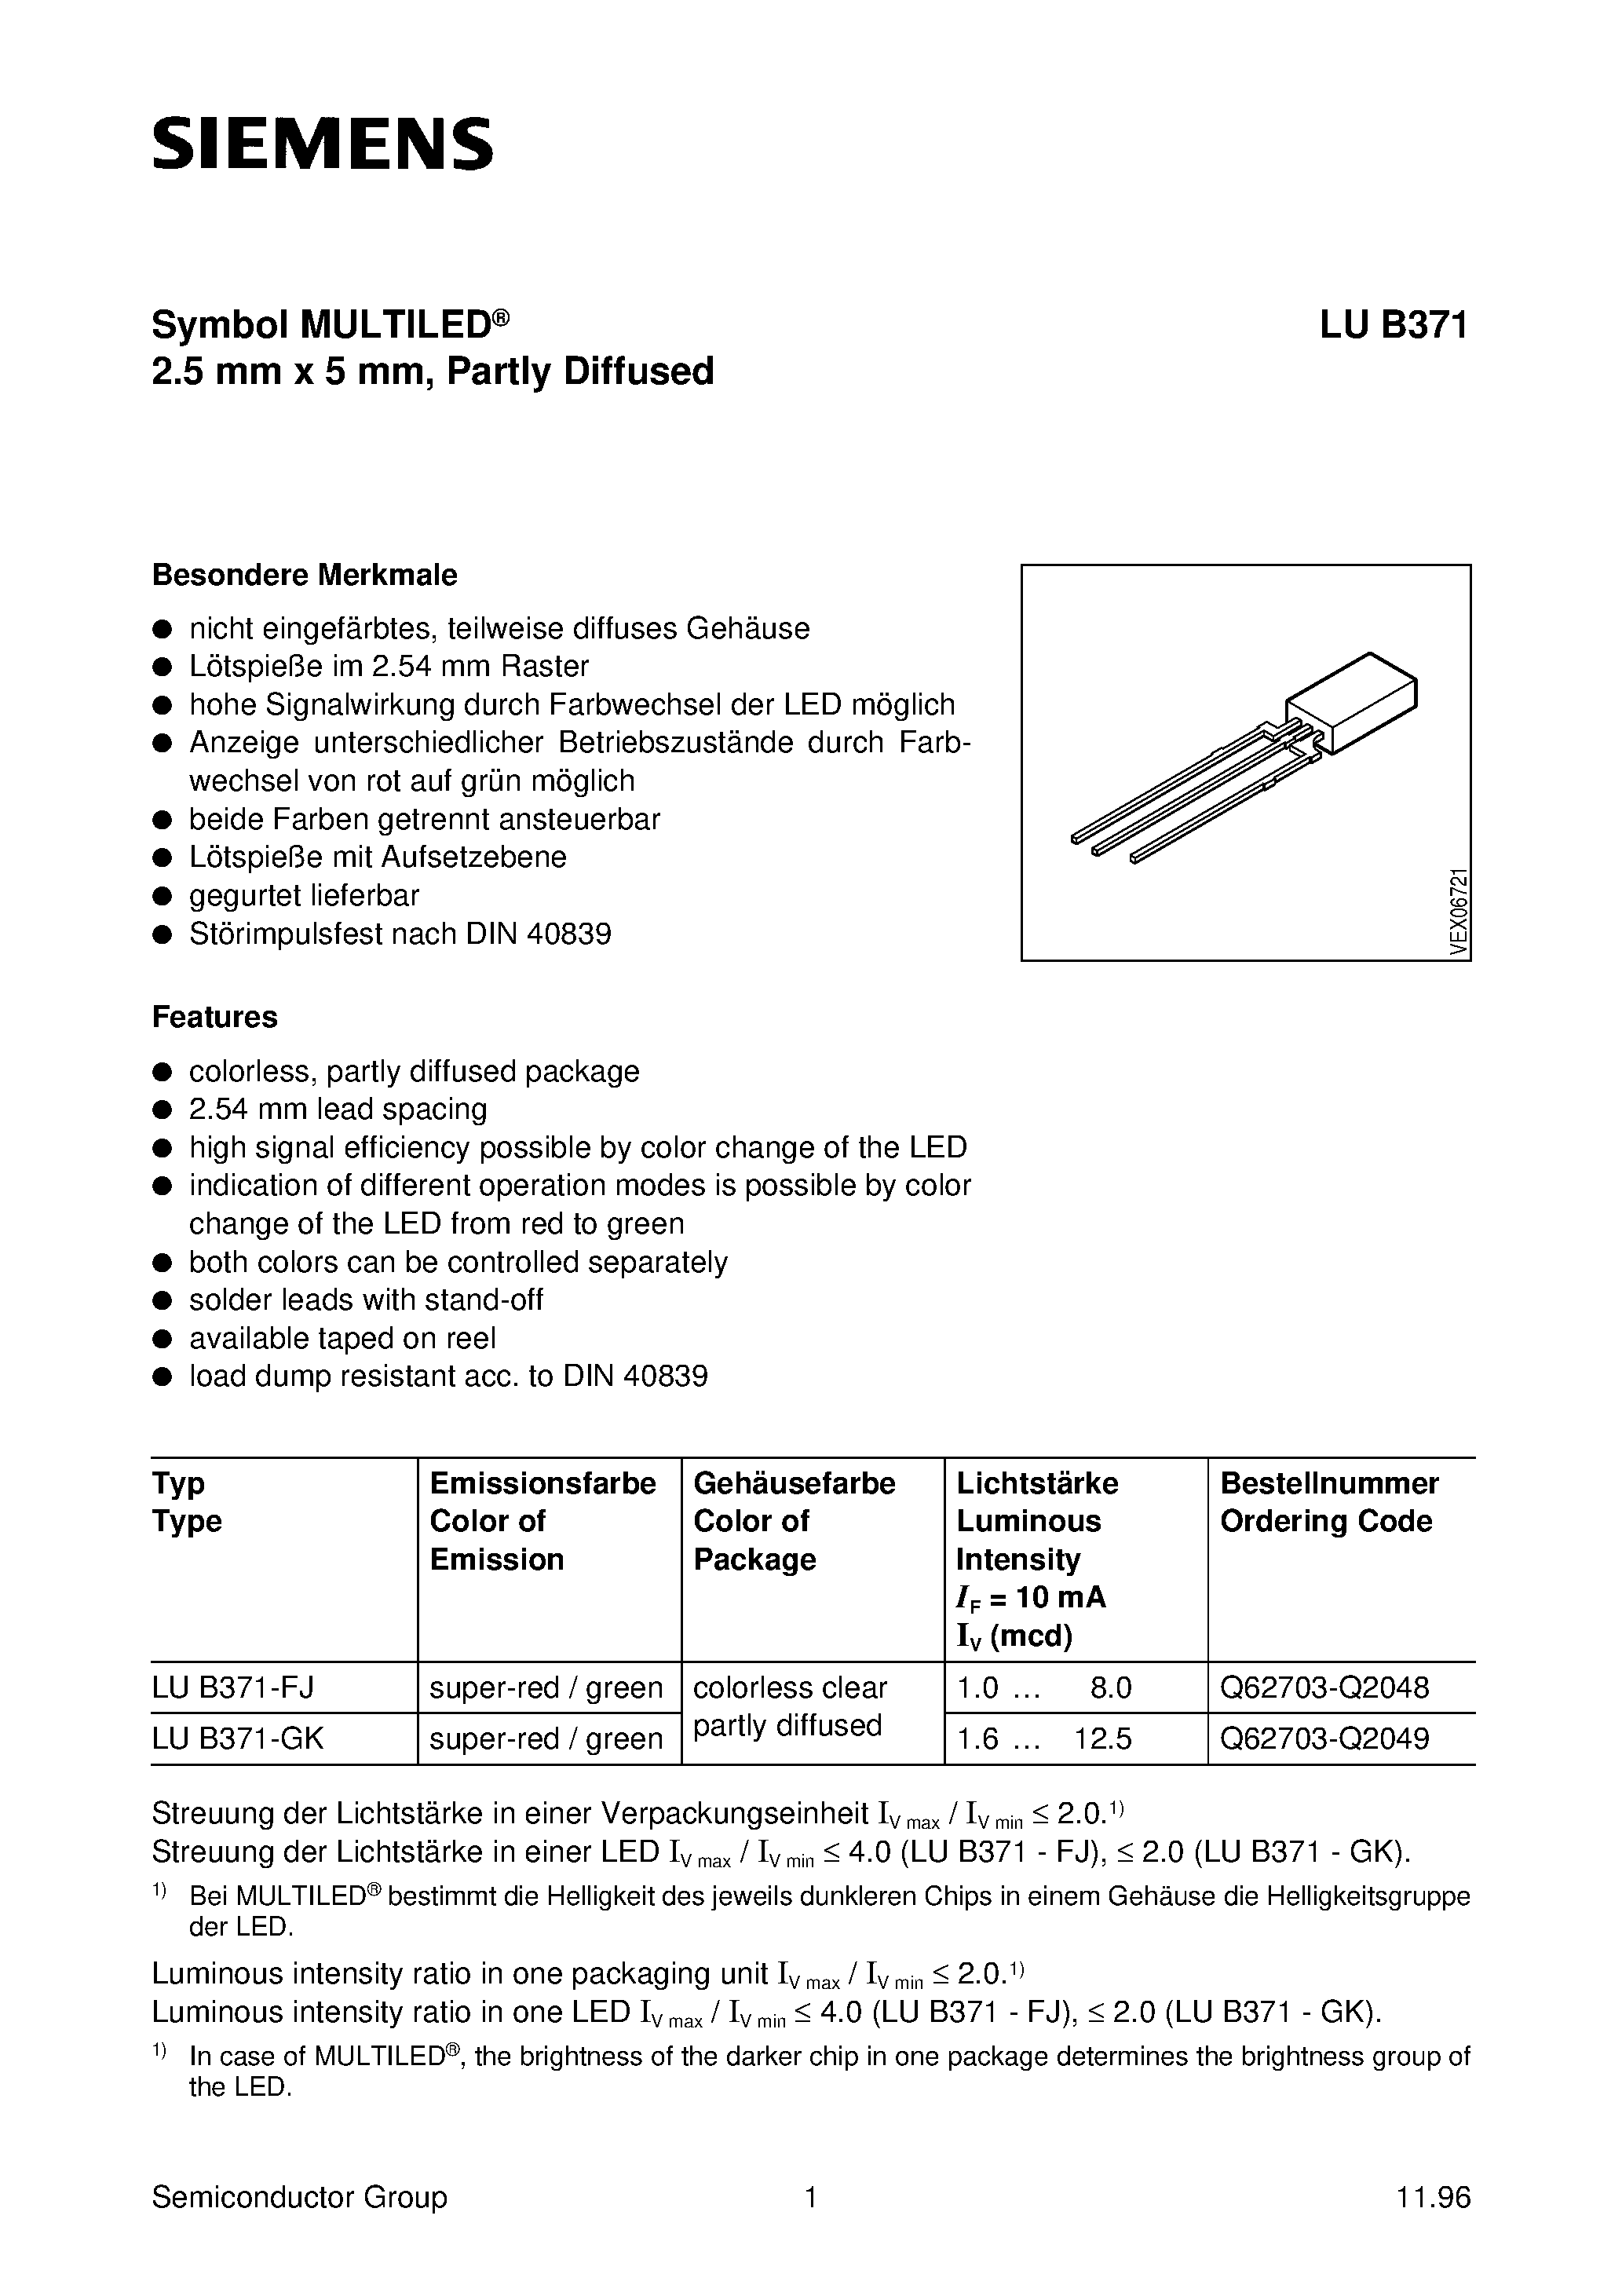 Datasheet LUB371-FJ - Symbol MULTILED 2.5 mm x 5 mm/ Partly Diffused page 1